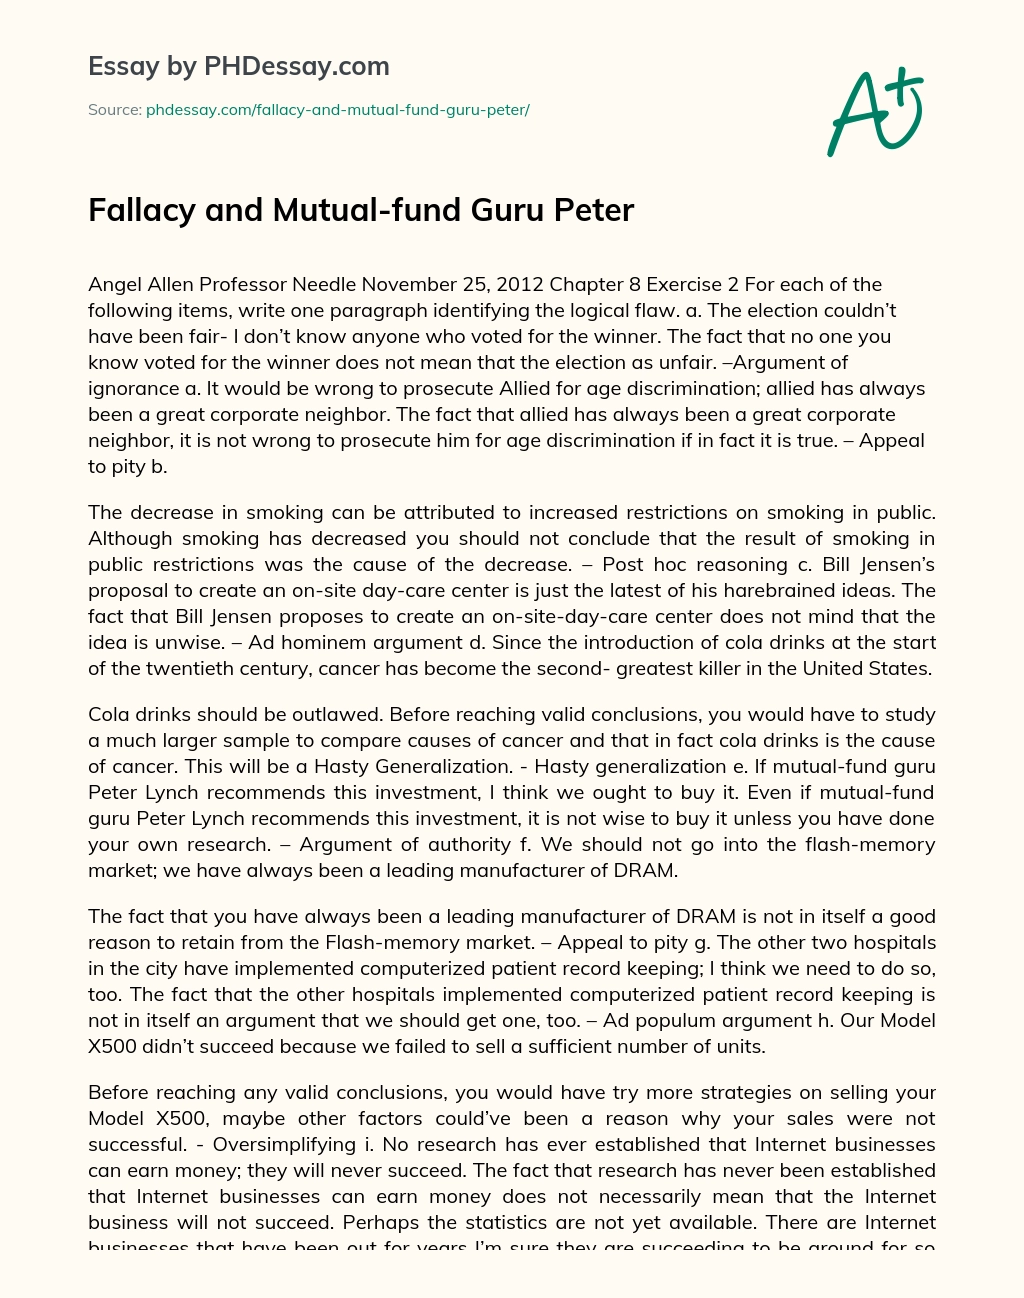 Fallacy and Mutual-fund Guru Peter essay